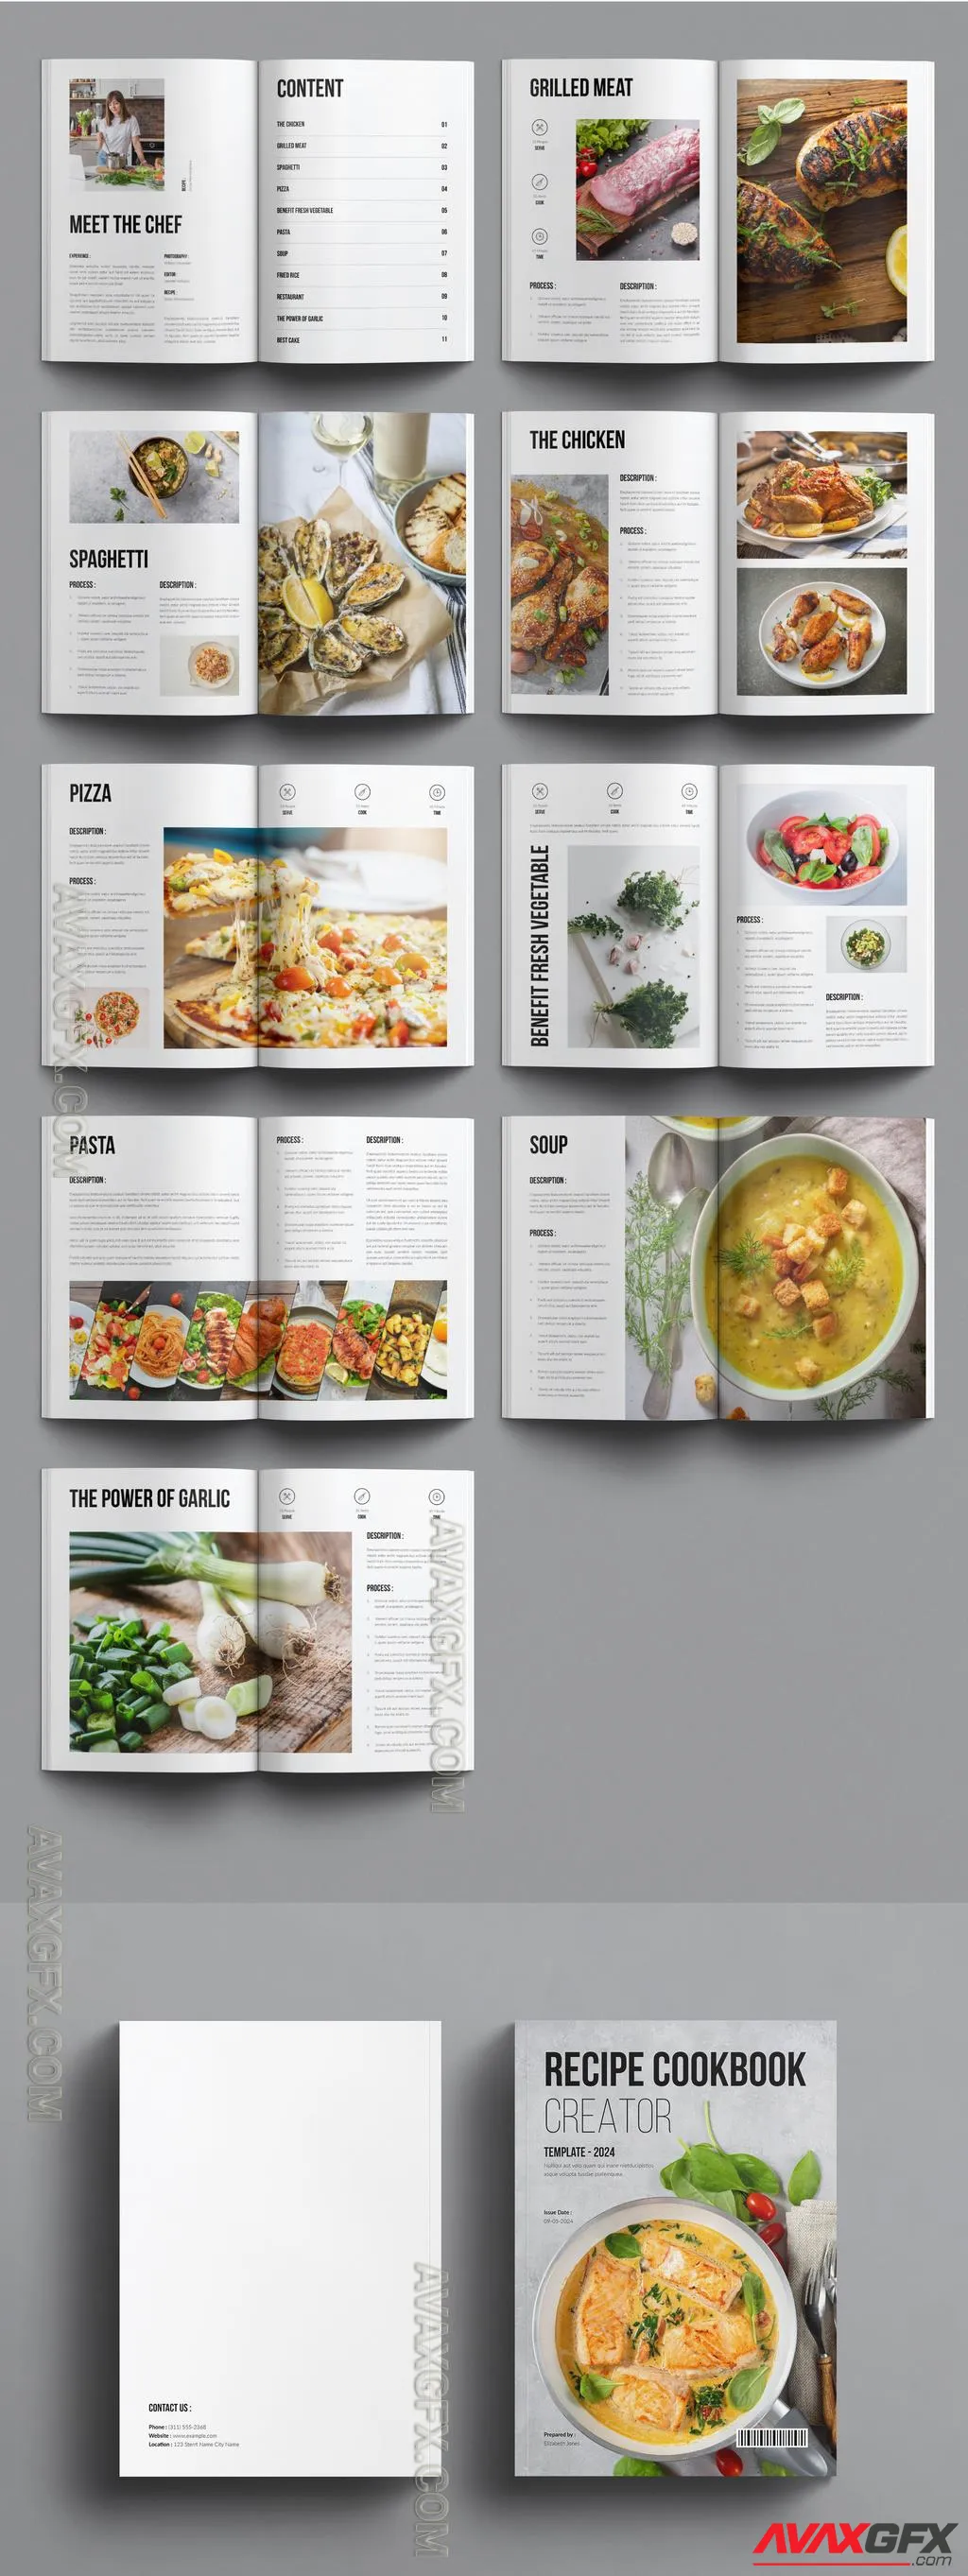 Adobestock - Recipe Book Creator Template 757185109